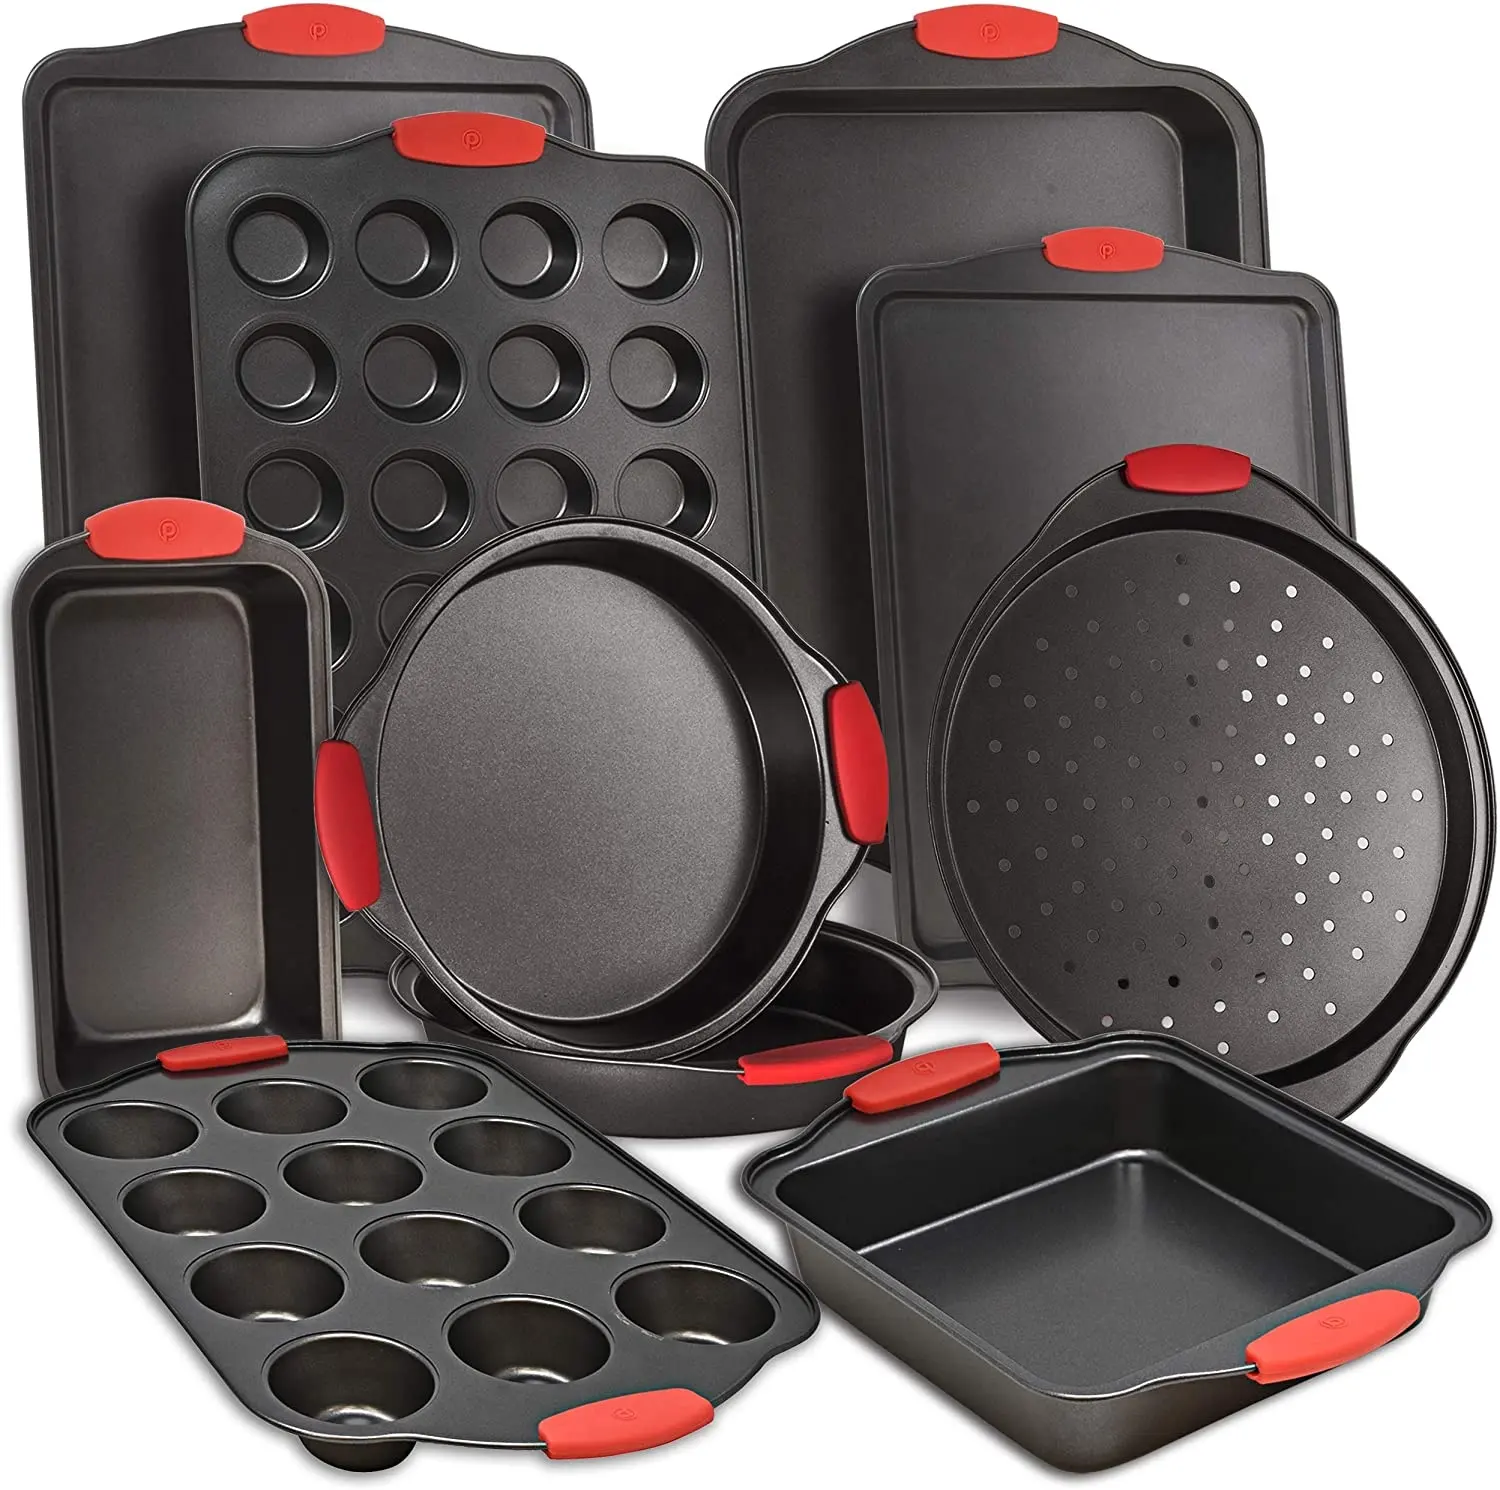 Amazon Hot Sale 10pc Bakeware Set with silicone handles baking pan baking sheet muffin pan pizza pan